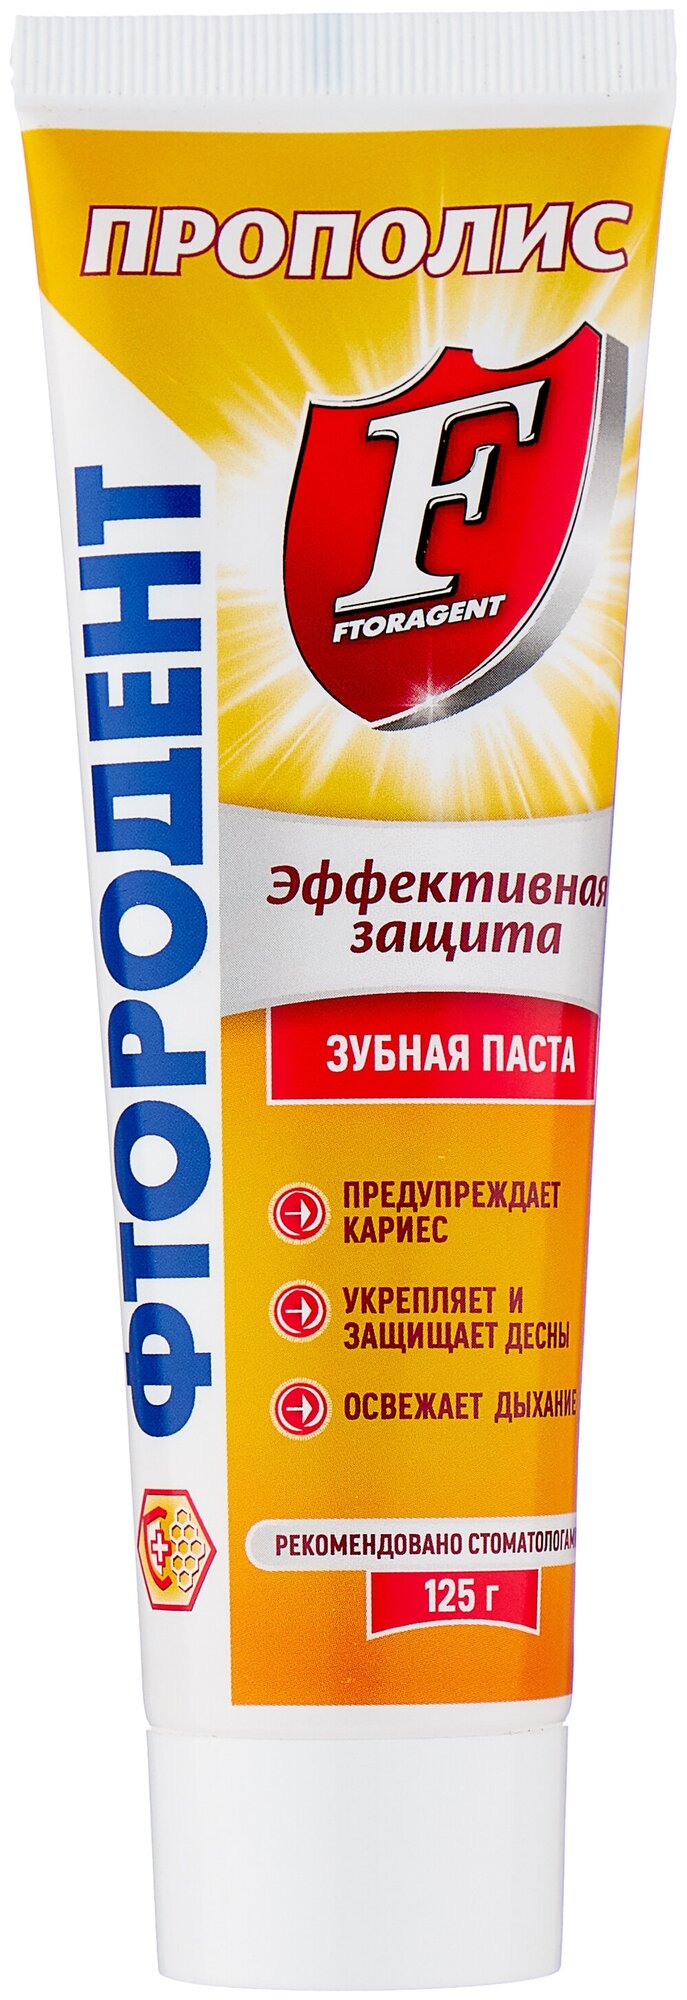 Зубная паста Фтородент (Аванта) Прополис эффективная защита, 125 мл